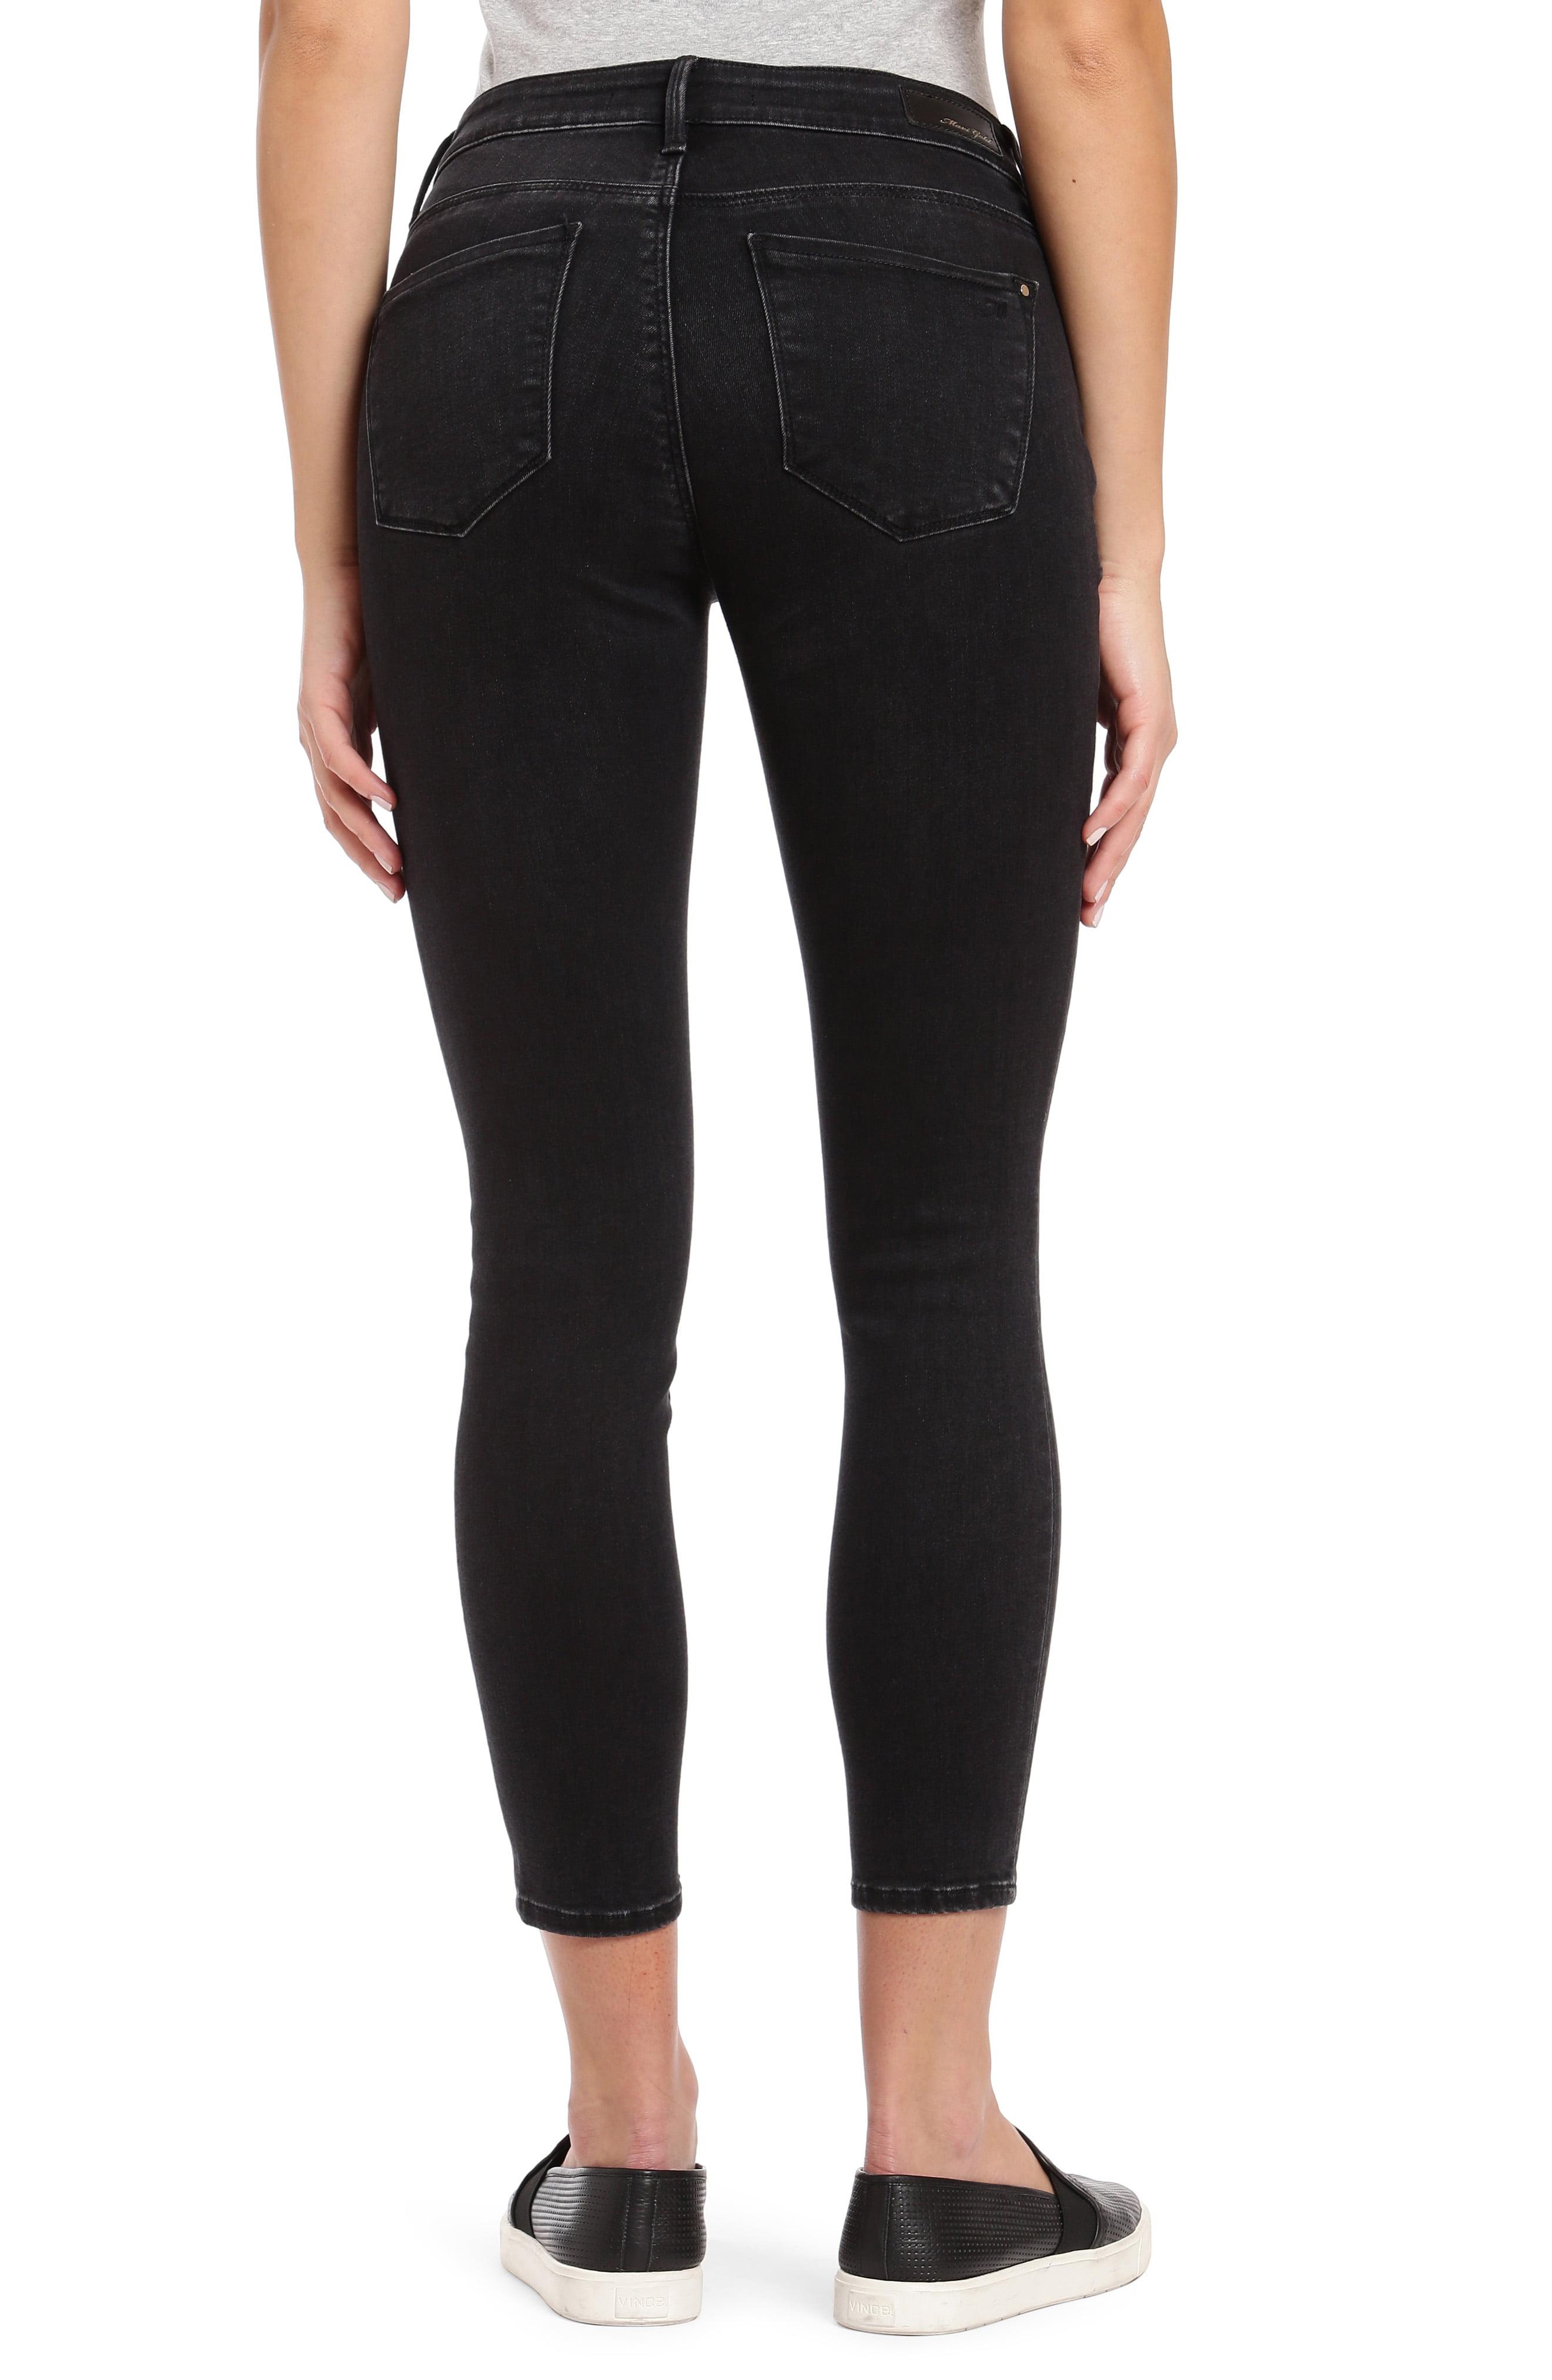 Lyst - Mavi Jeans Tess High Waist Ankle Skinny Jeans in Black